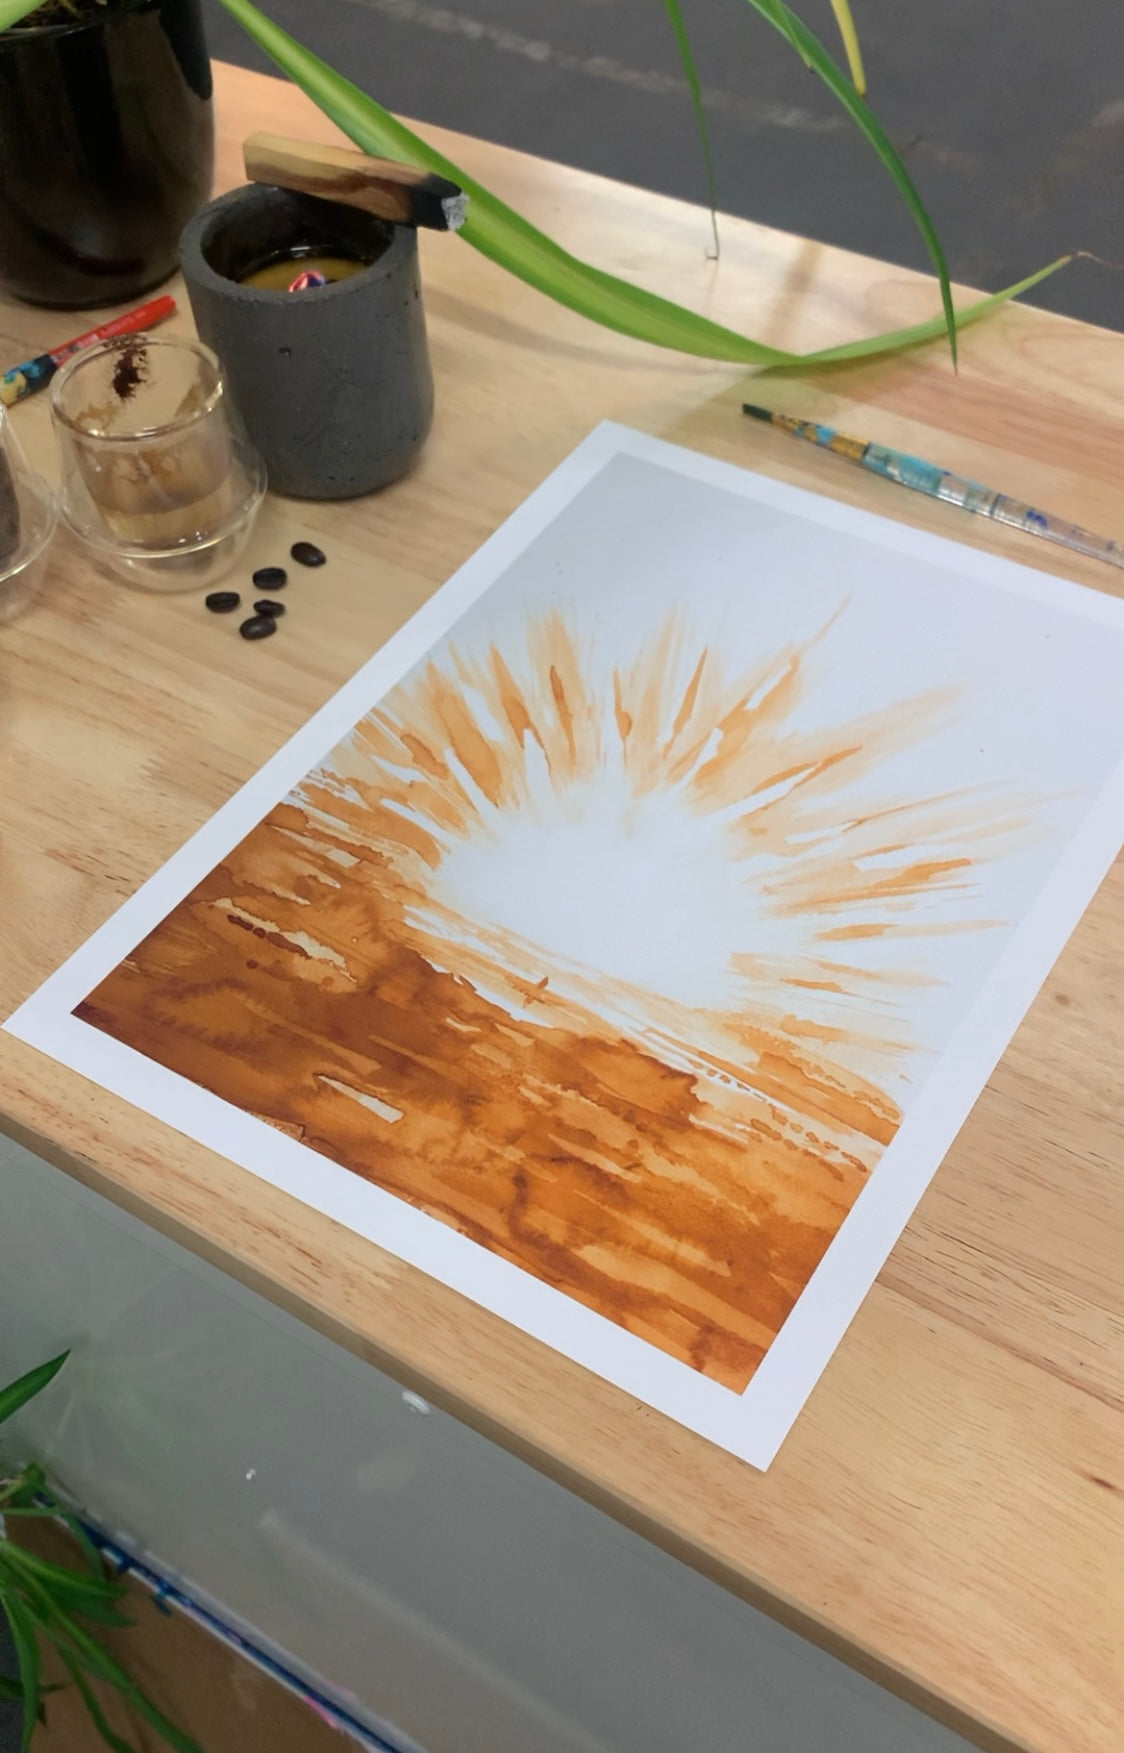 Sun Explorer / Coffee Print